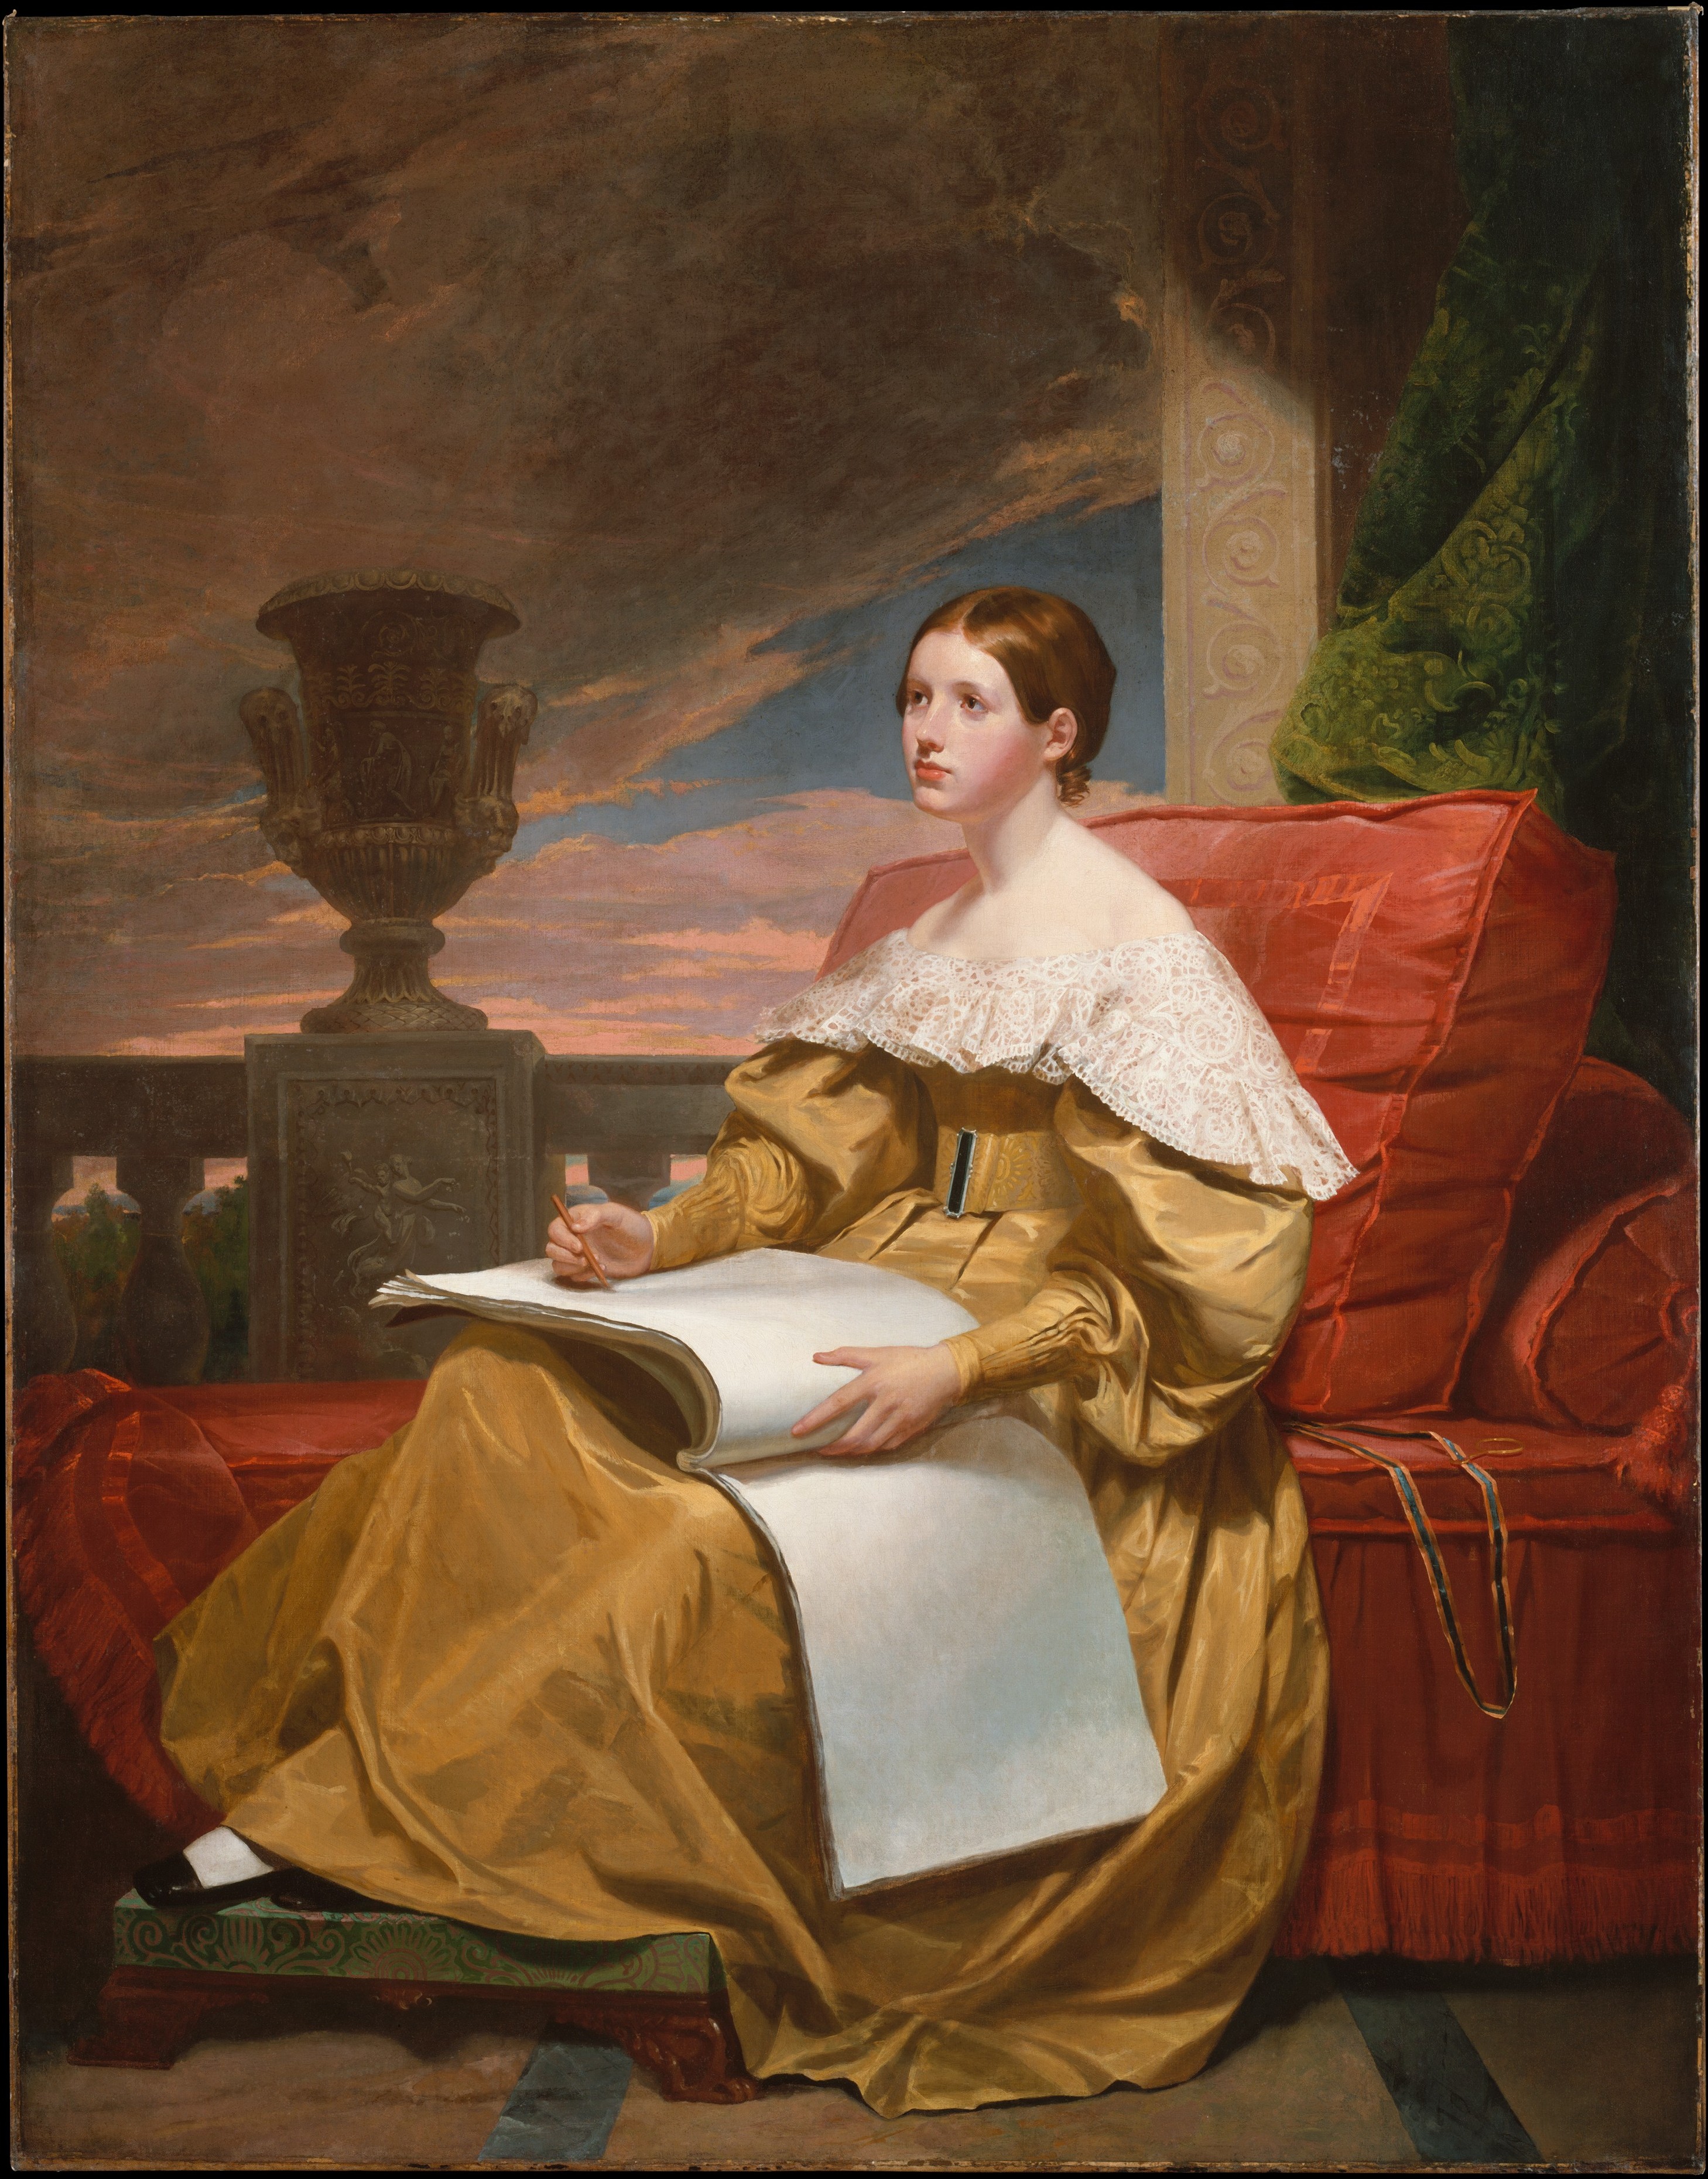 Susan Walker Morse (The Muse) by Samuel F. B. Morse - c. 1836-37 - 187.3 x 146.4 cm Metropolitan Museum of Art